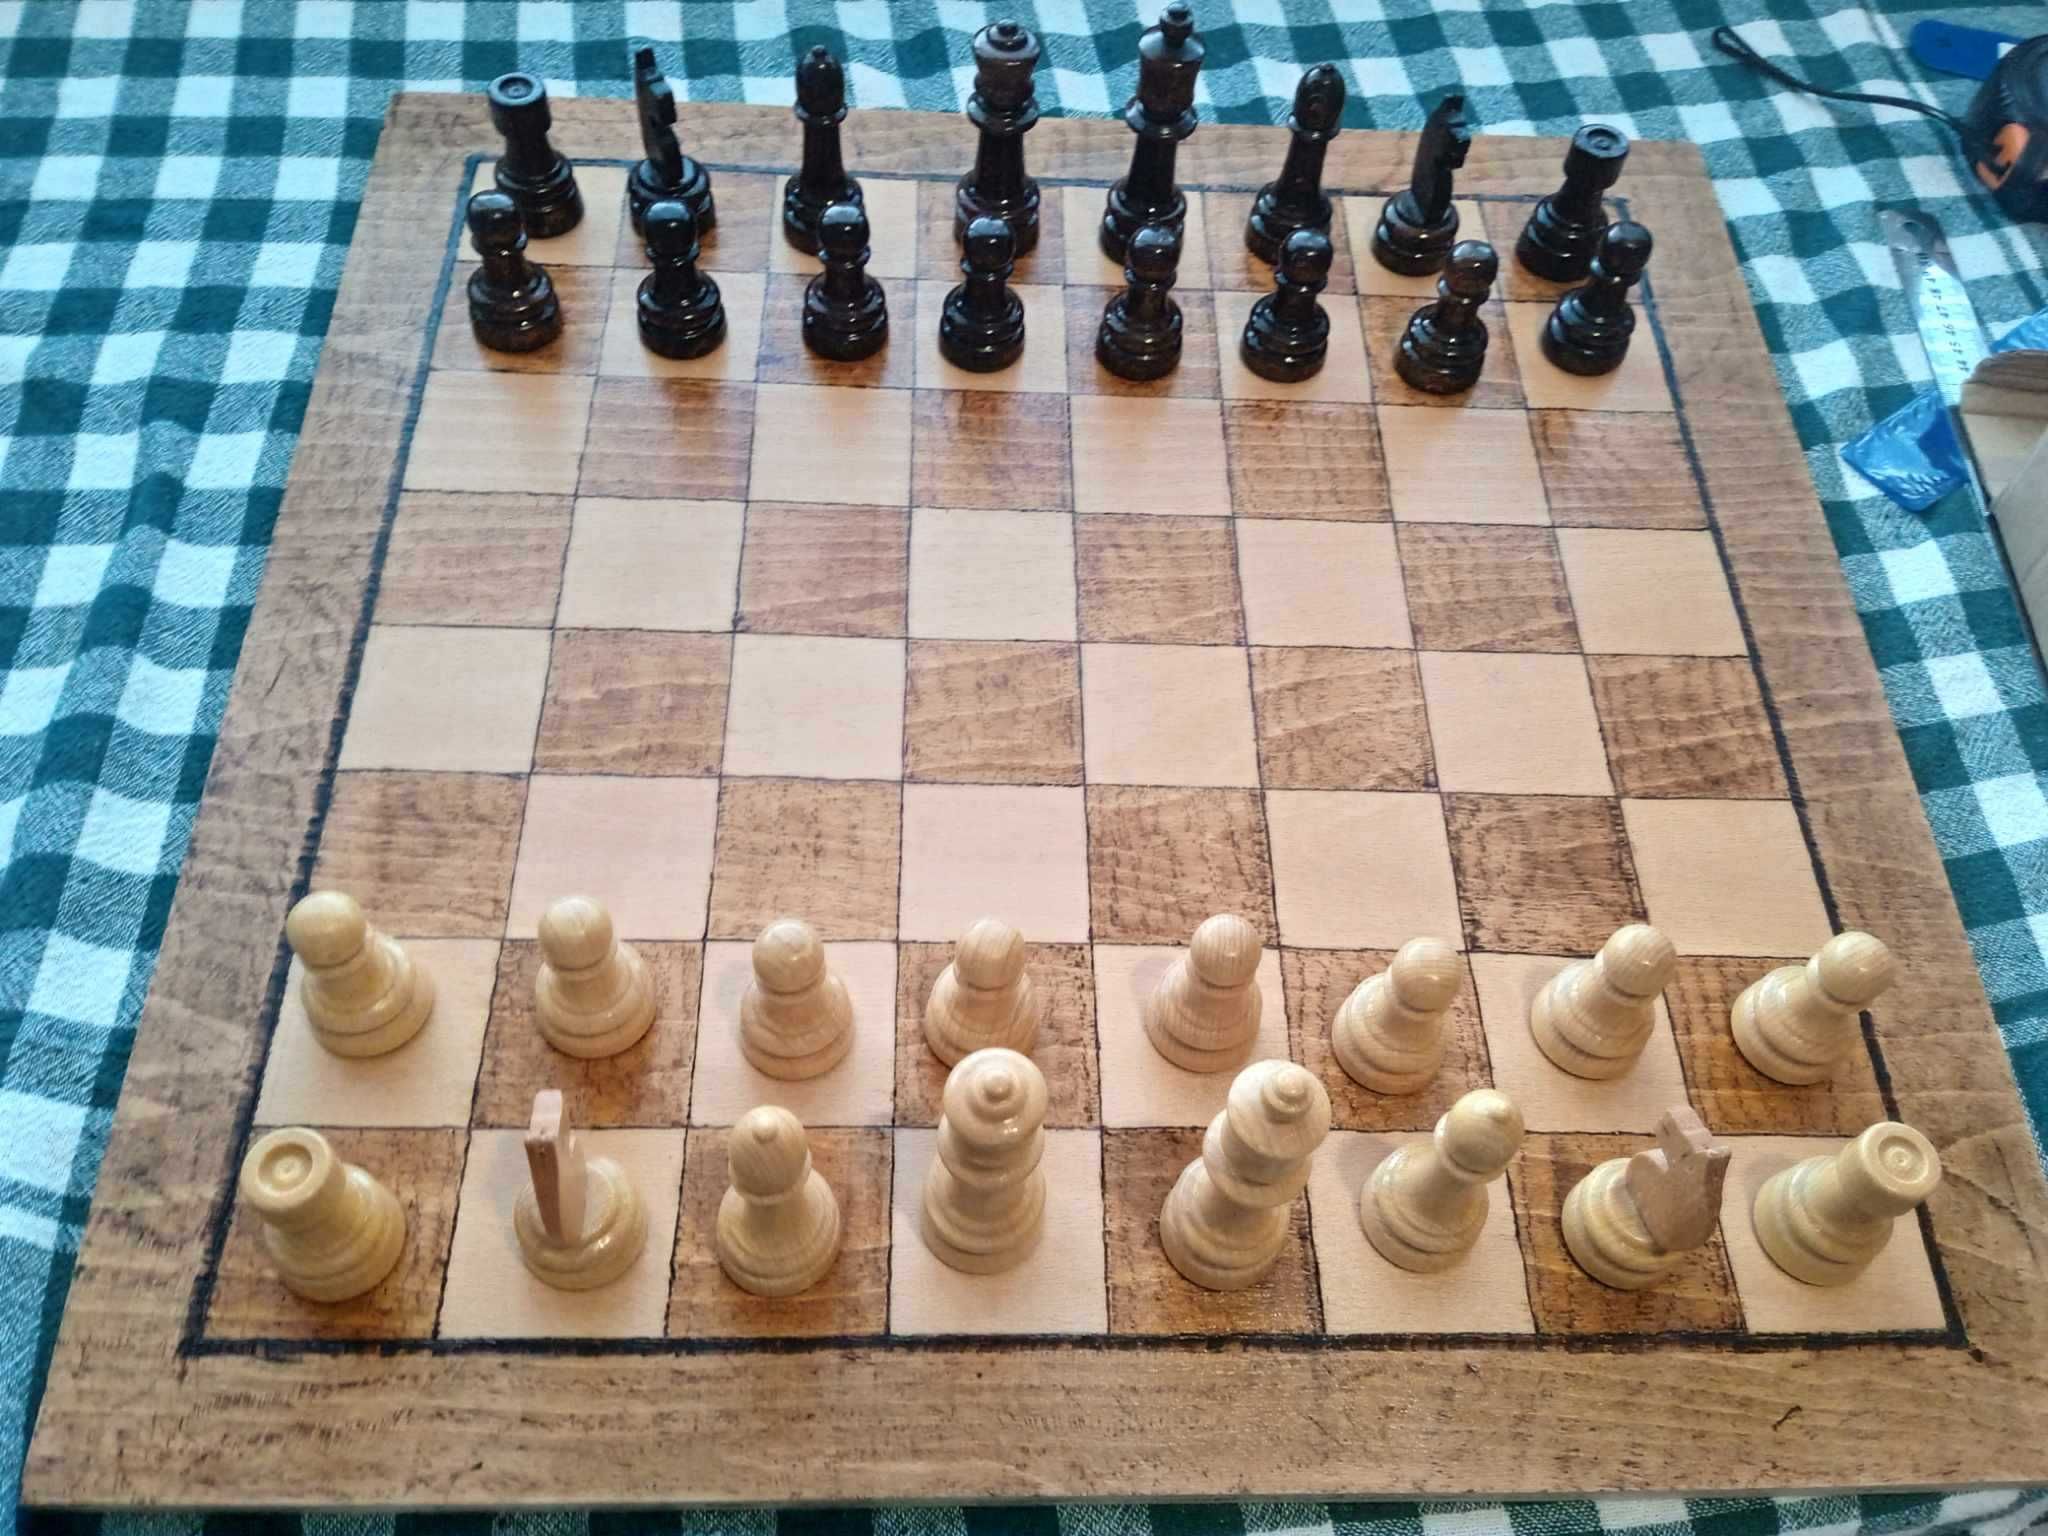 Шах- шахматно табло